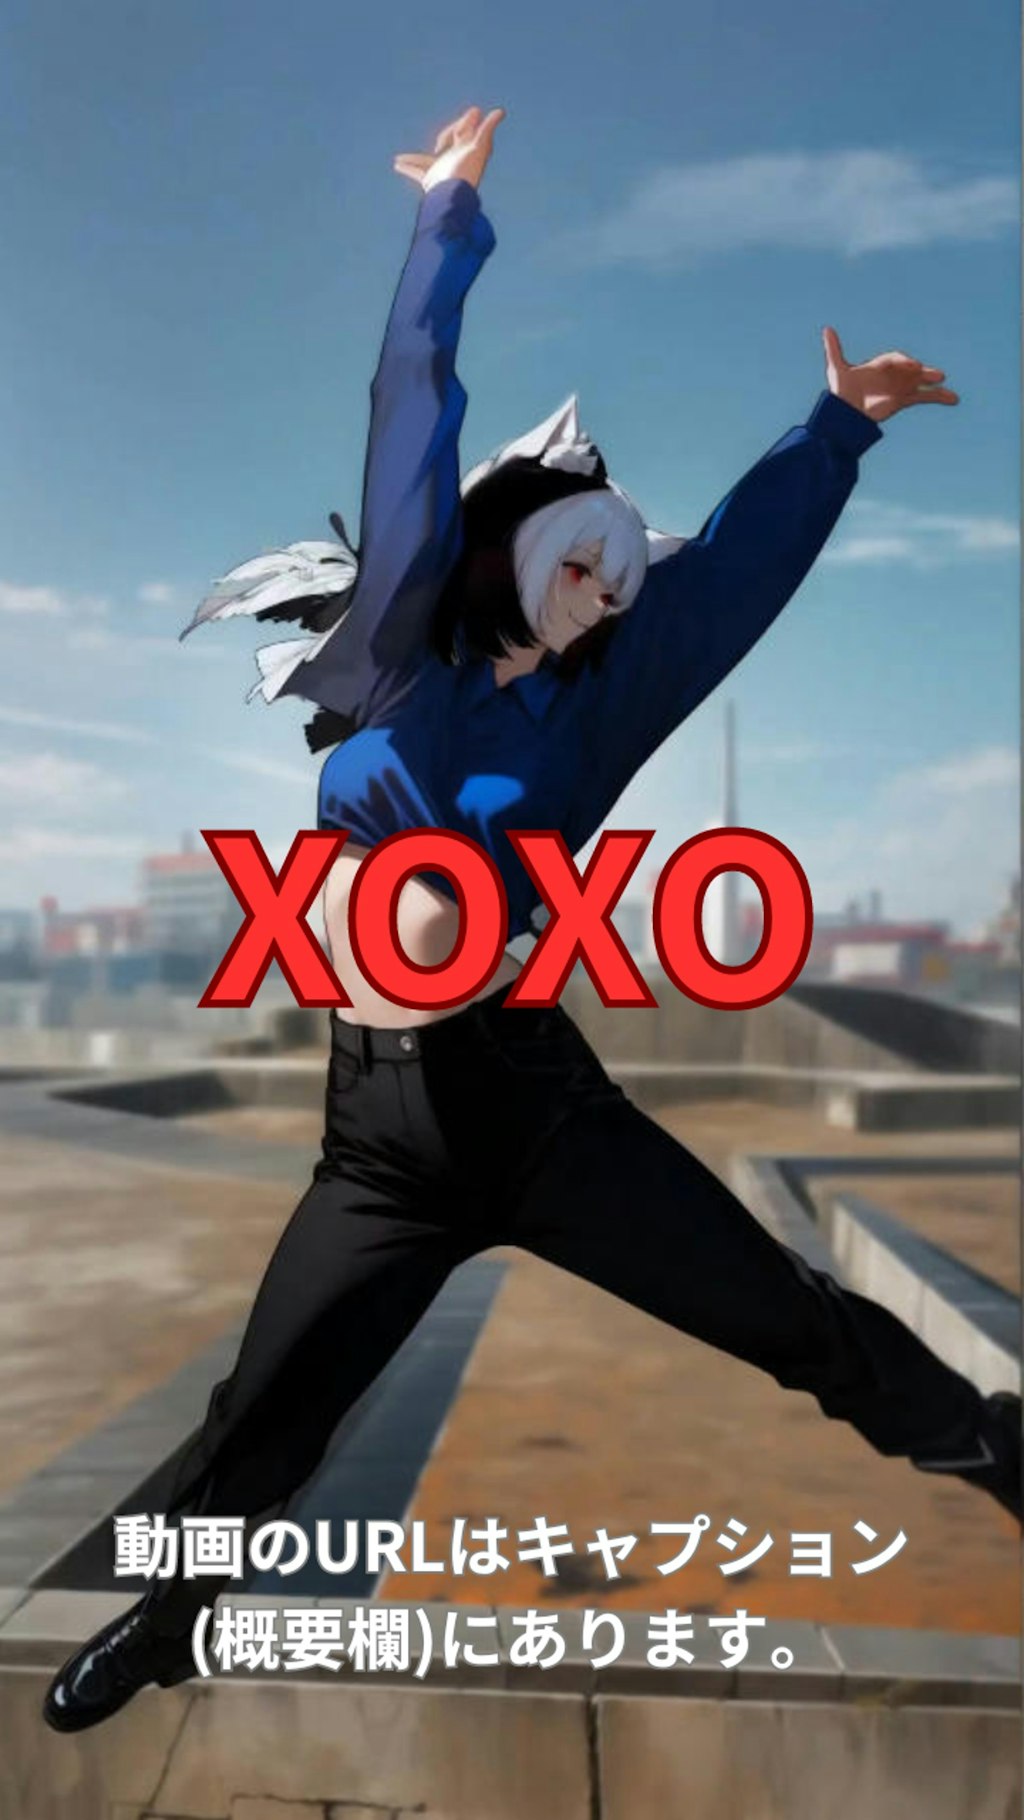 「XOXO」を踊ってみた(リメイク)【南条采良 様】【めんたるさん】